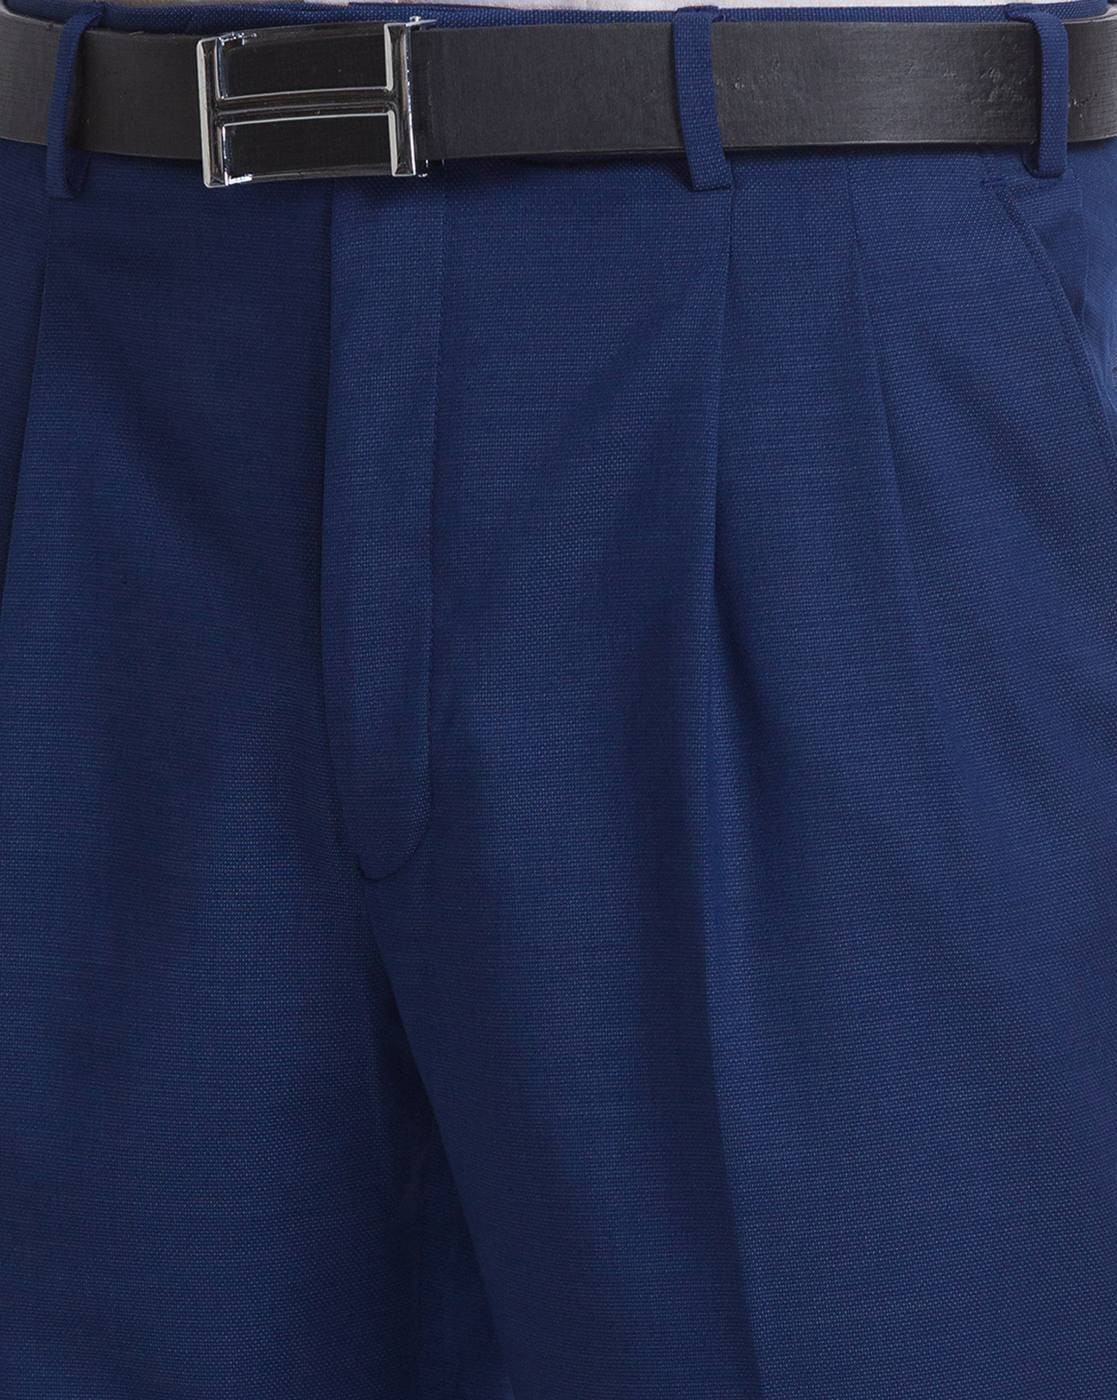 Buy Genes Lecoanet Hemant Multicoloured Mens Striped Pleated Trouser online